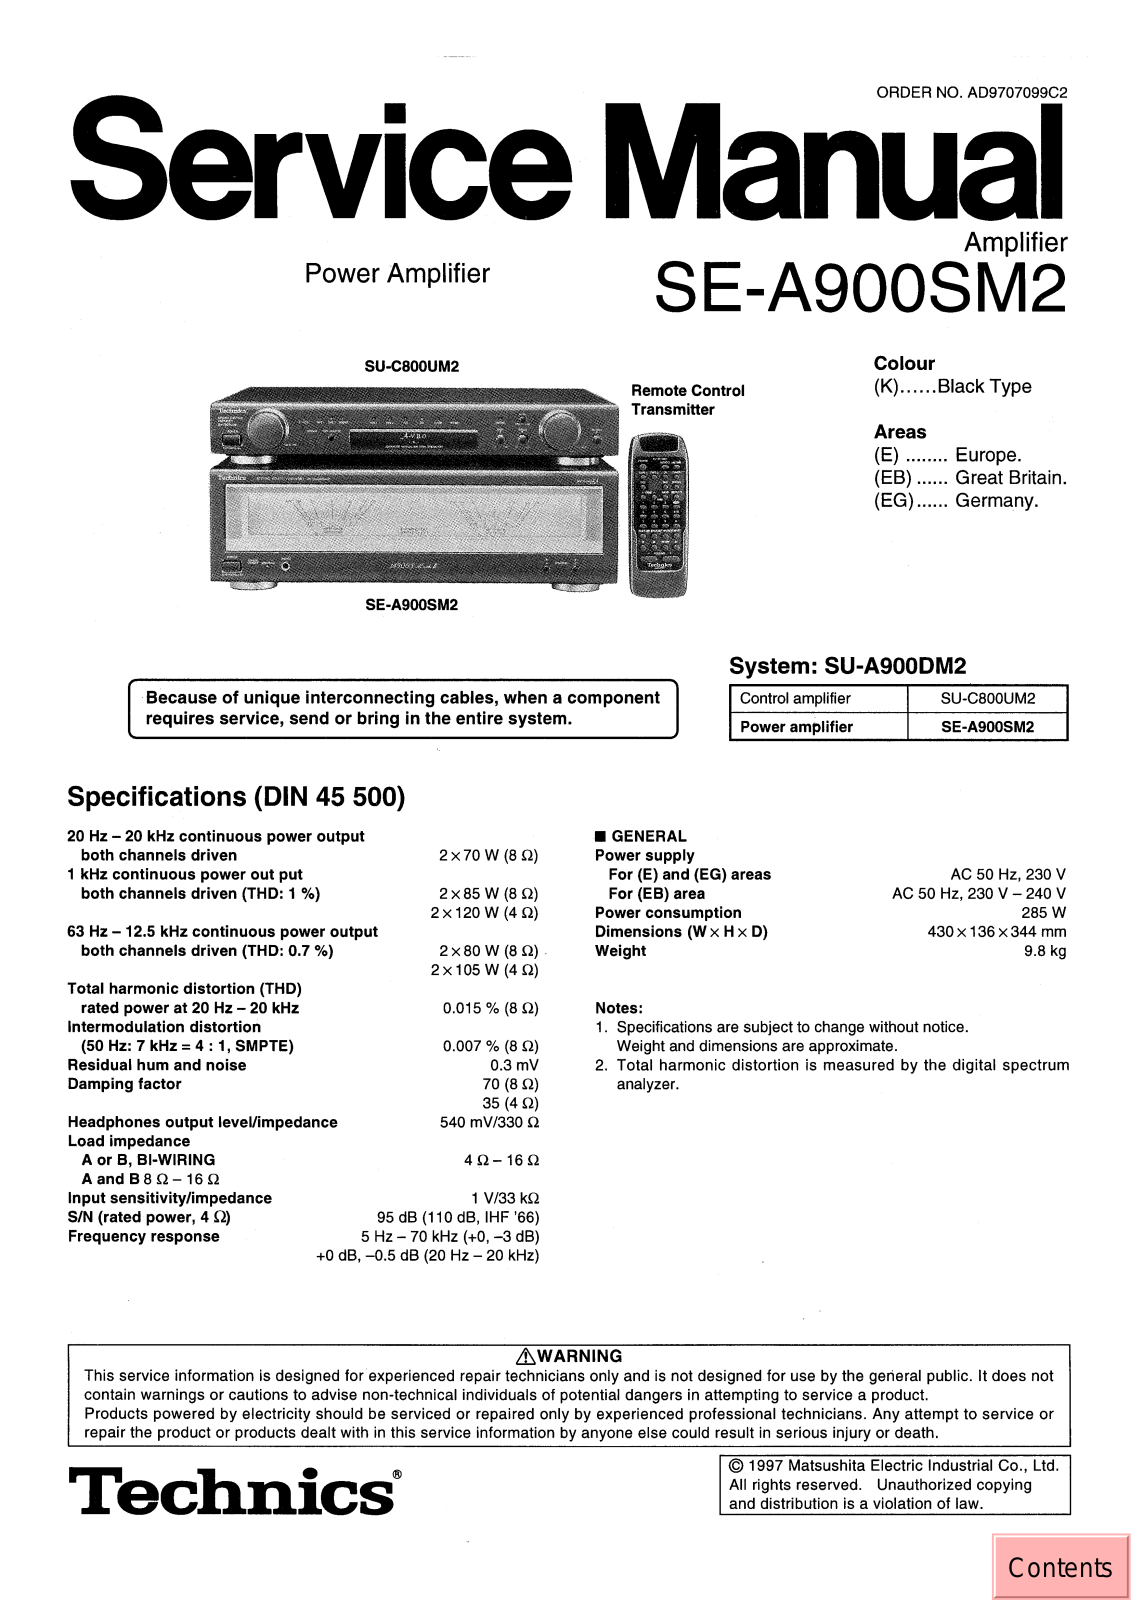 TECHNICS SE-A900SM2 Service Manual